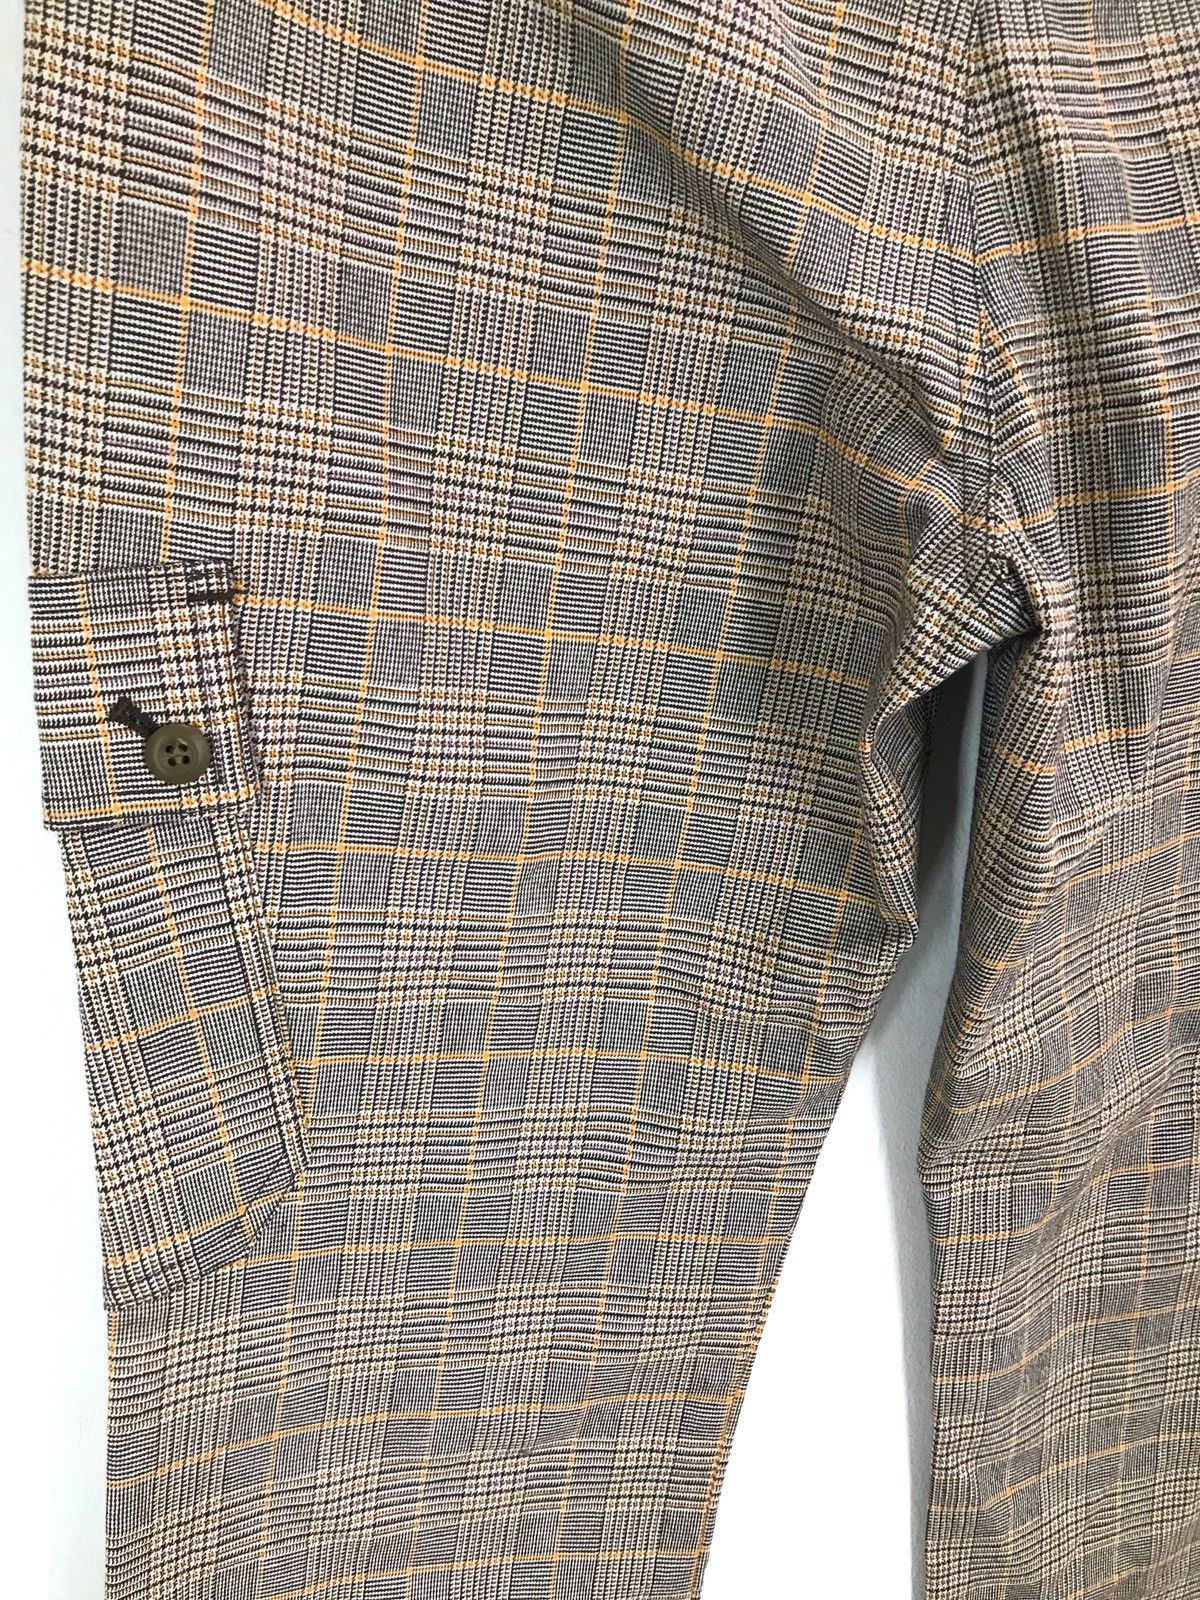 Very Rare Japanese Brand designer Checkered stretchable Cargo Pants Size US 30 / EU 46 - 9 Thumbnail